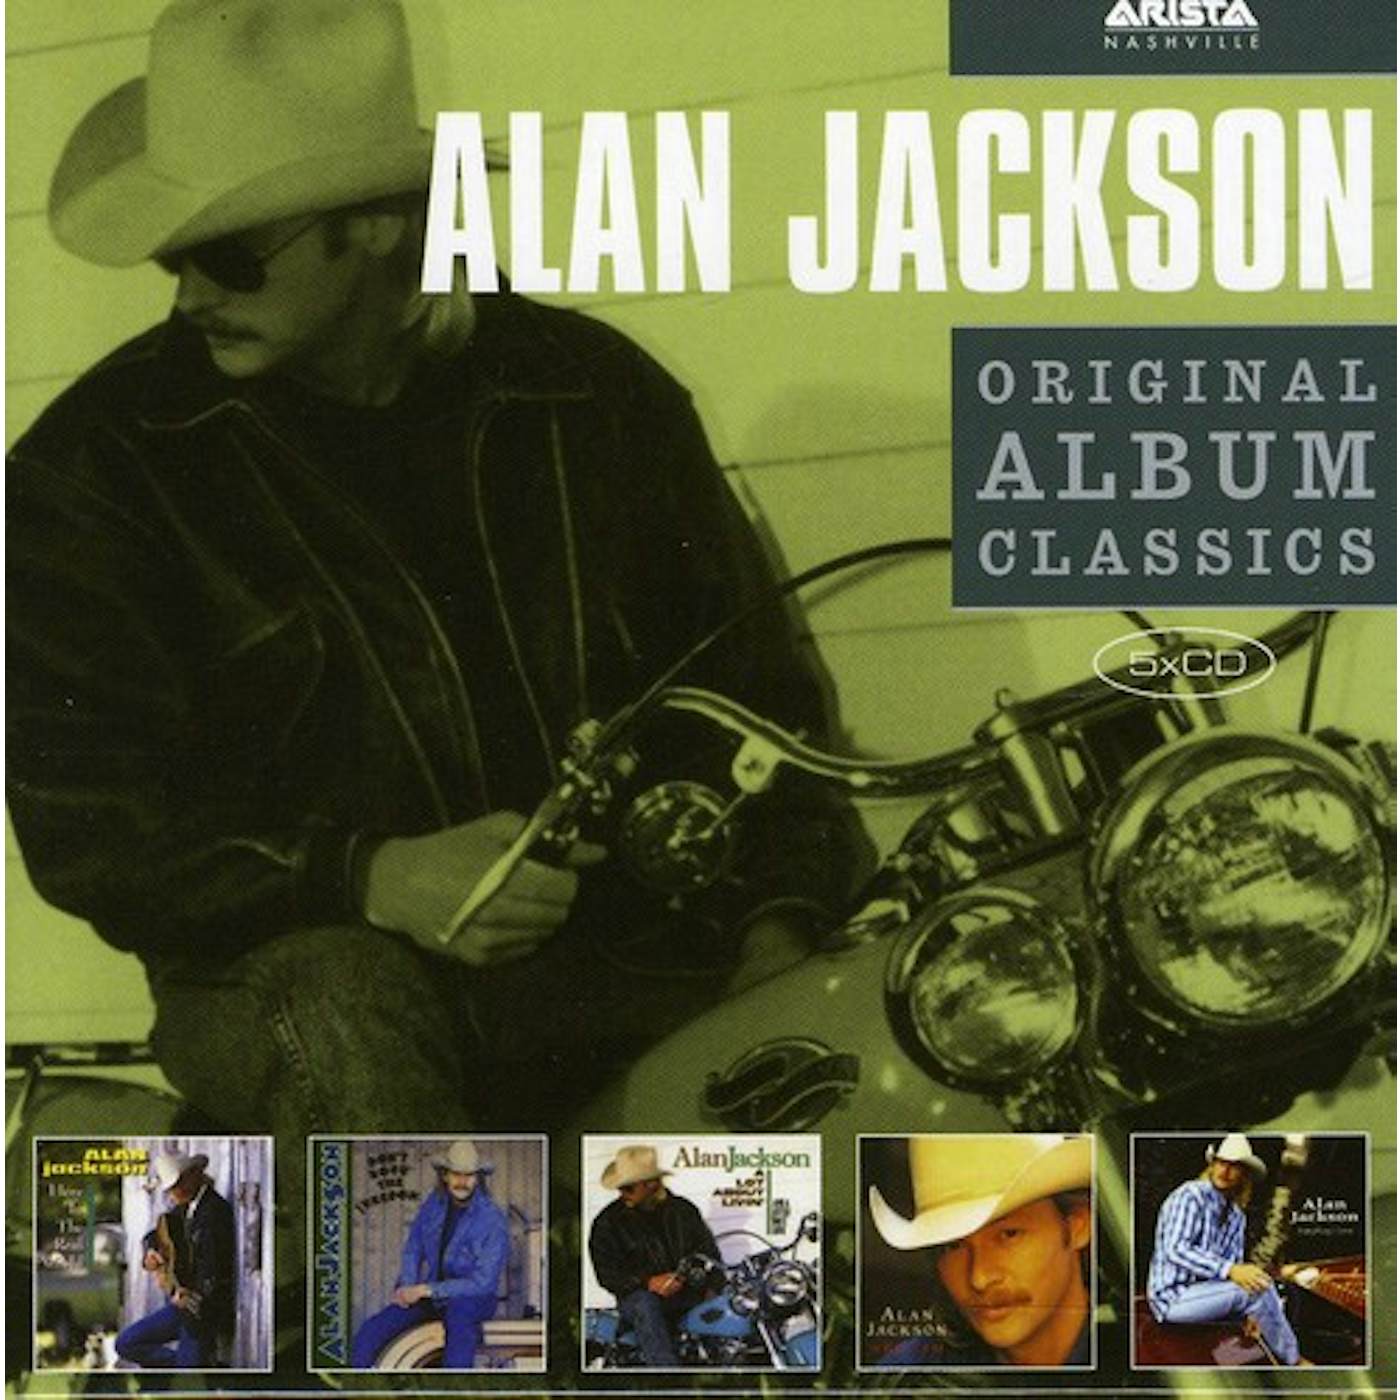 Alan Jackson ORIGINAL ALBUM CLASSICS CD